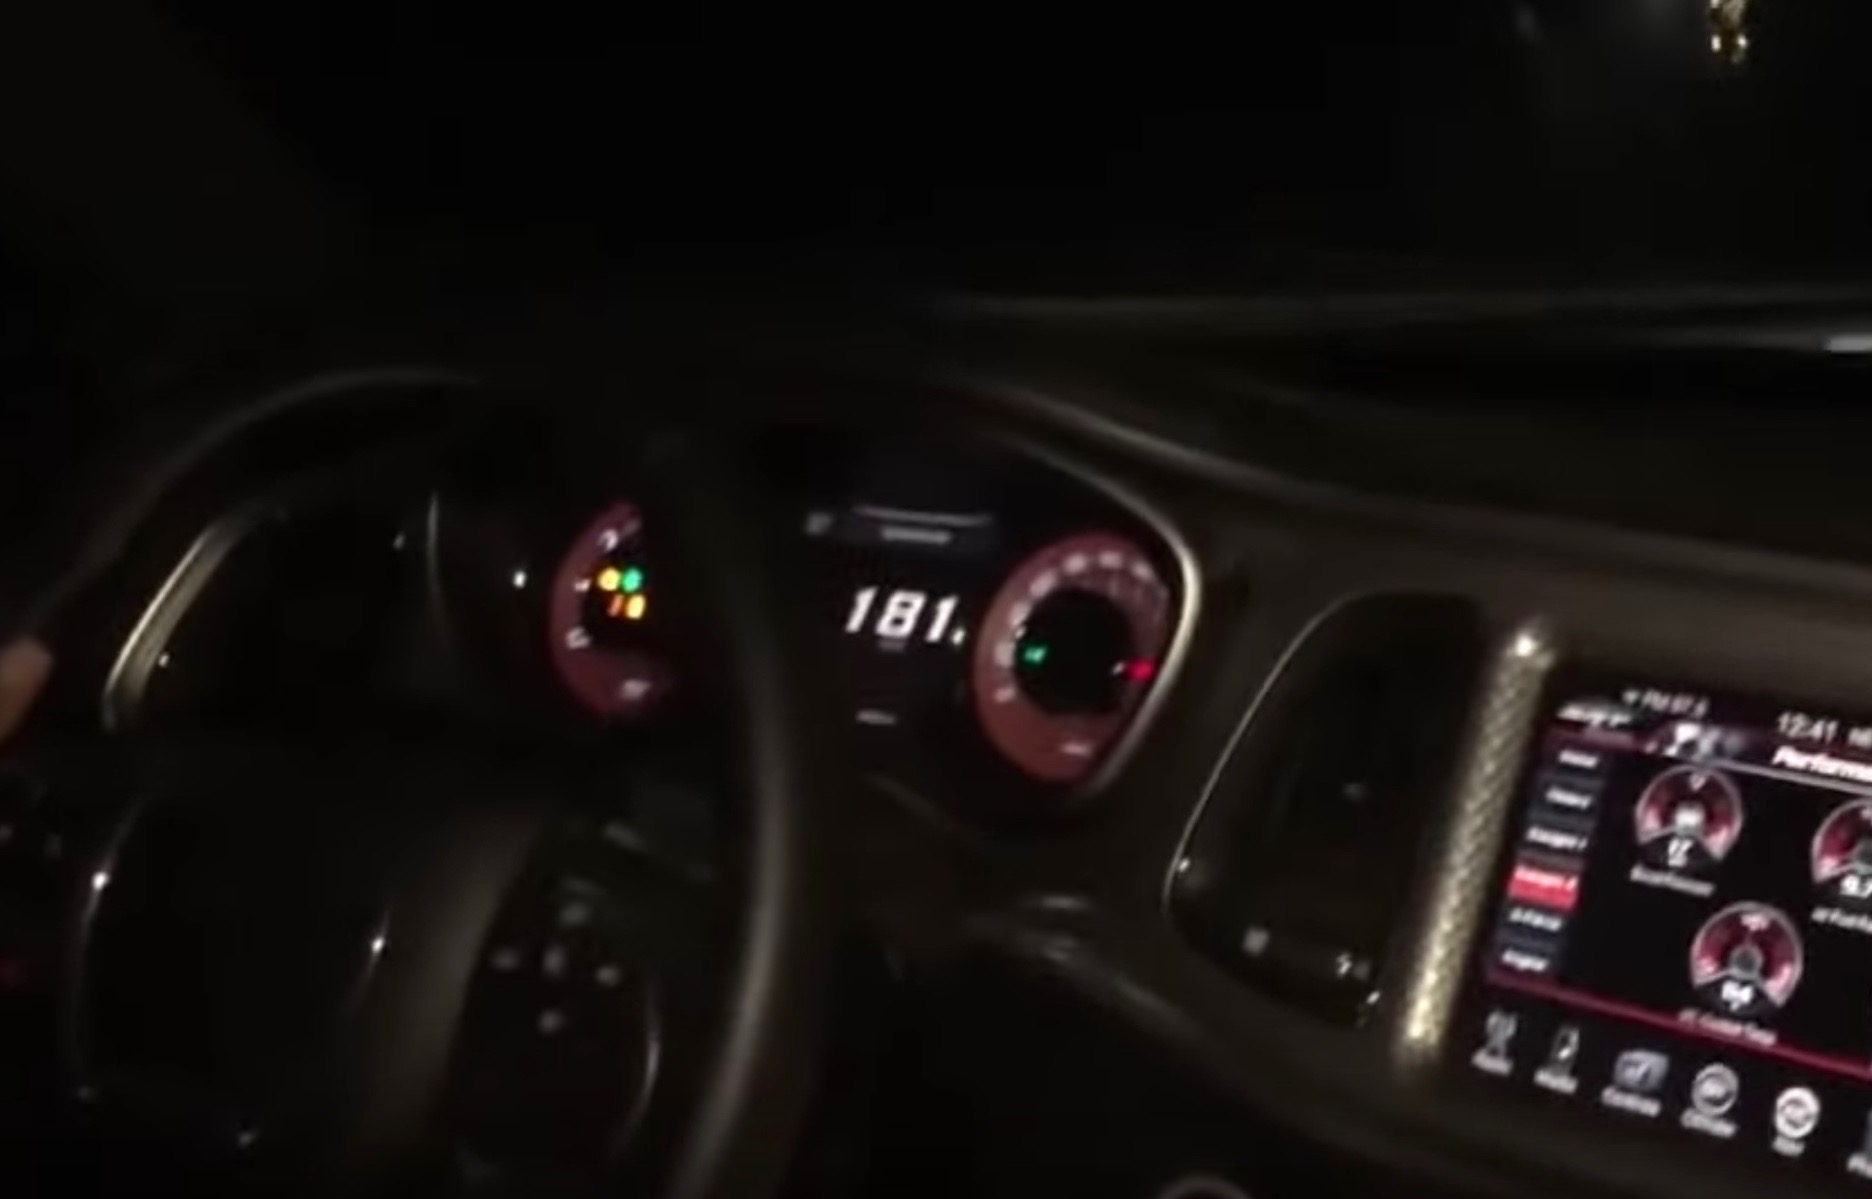 Video helps convict speeding Hellcat driver, over 300km/h